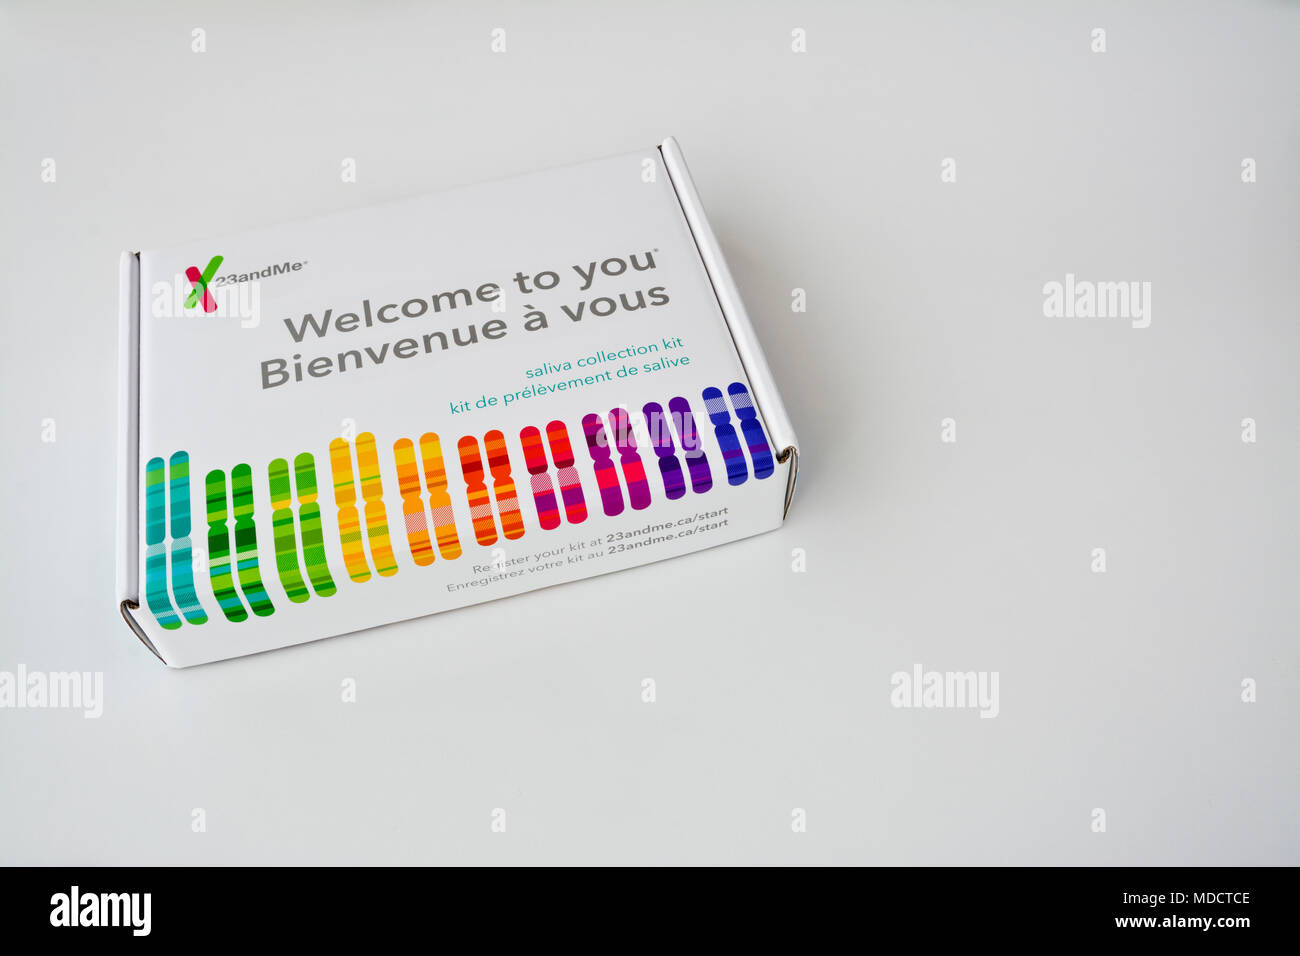 23andme Home DNA Test Kit. Box mit DNA-Test Kit von 23andme Stockfotografie  - Alamy